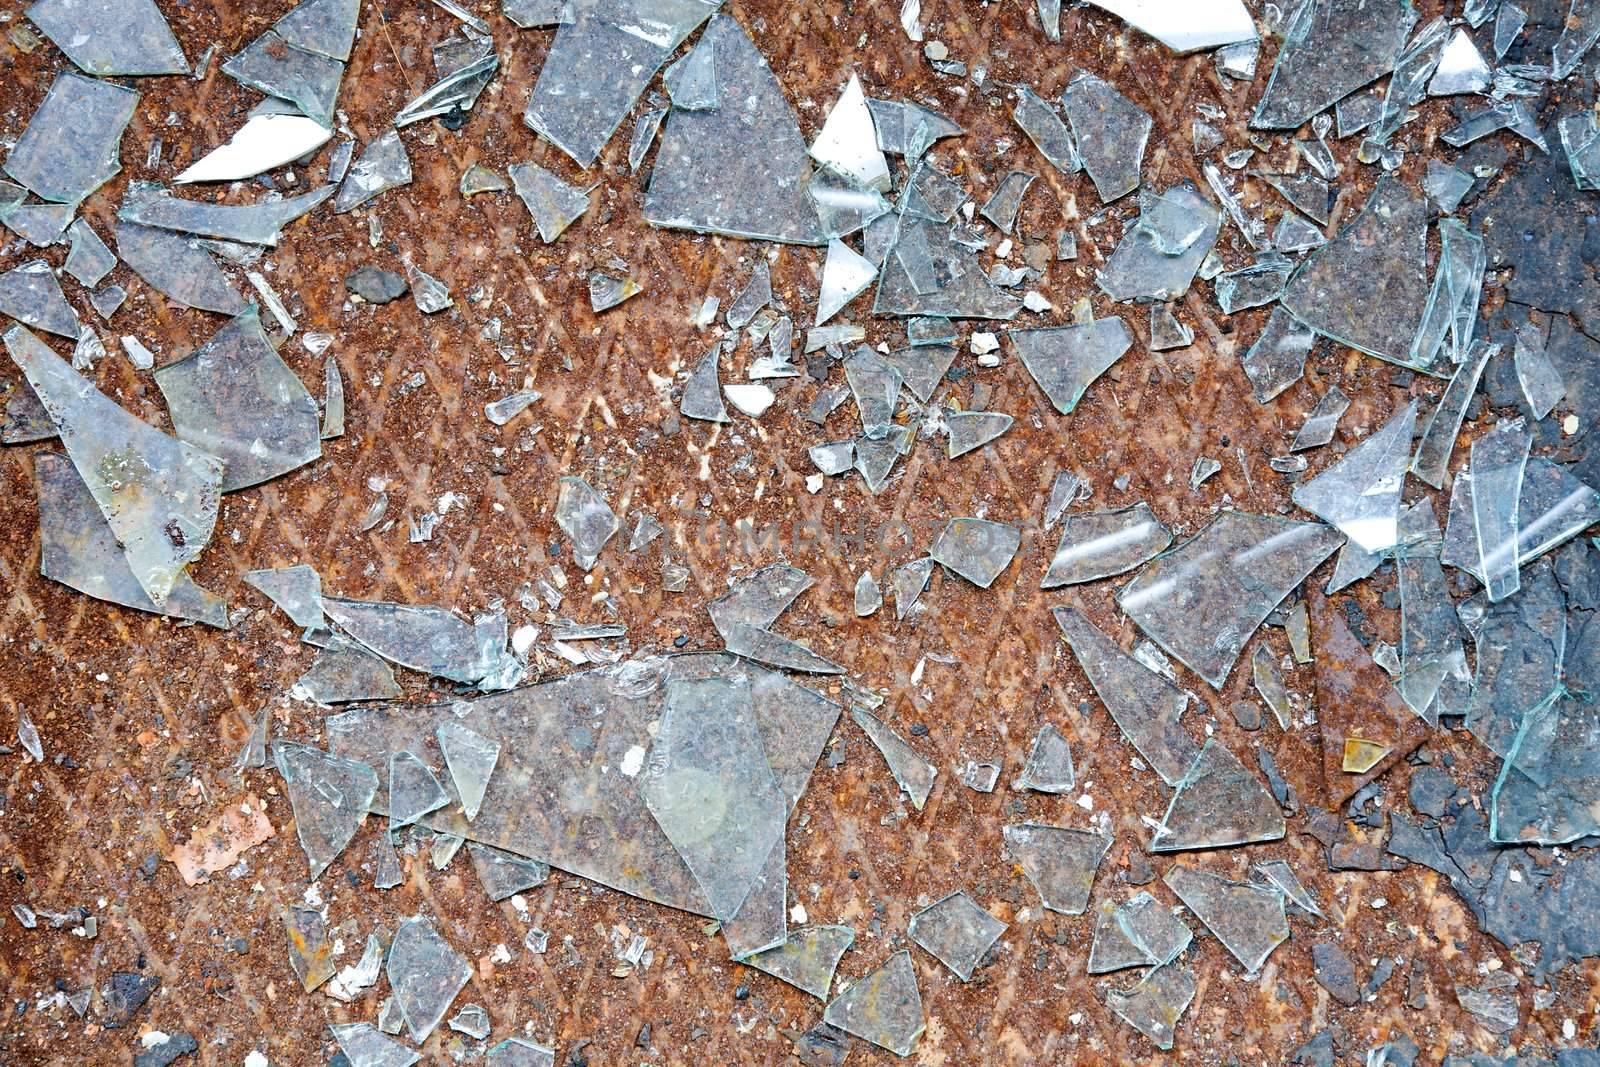 The rusty old metal floor and splinters of glass